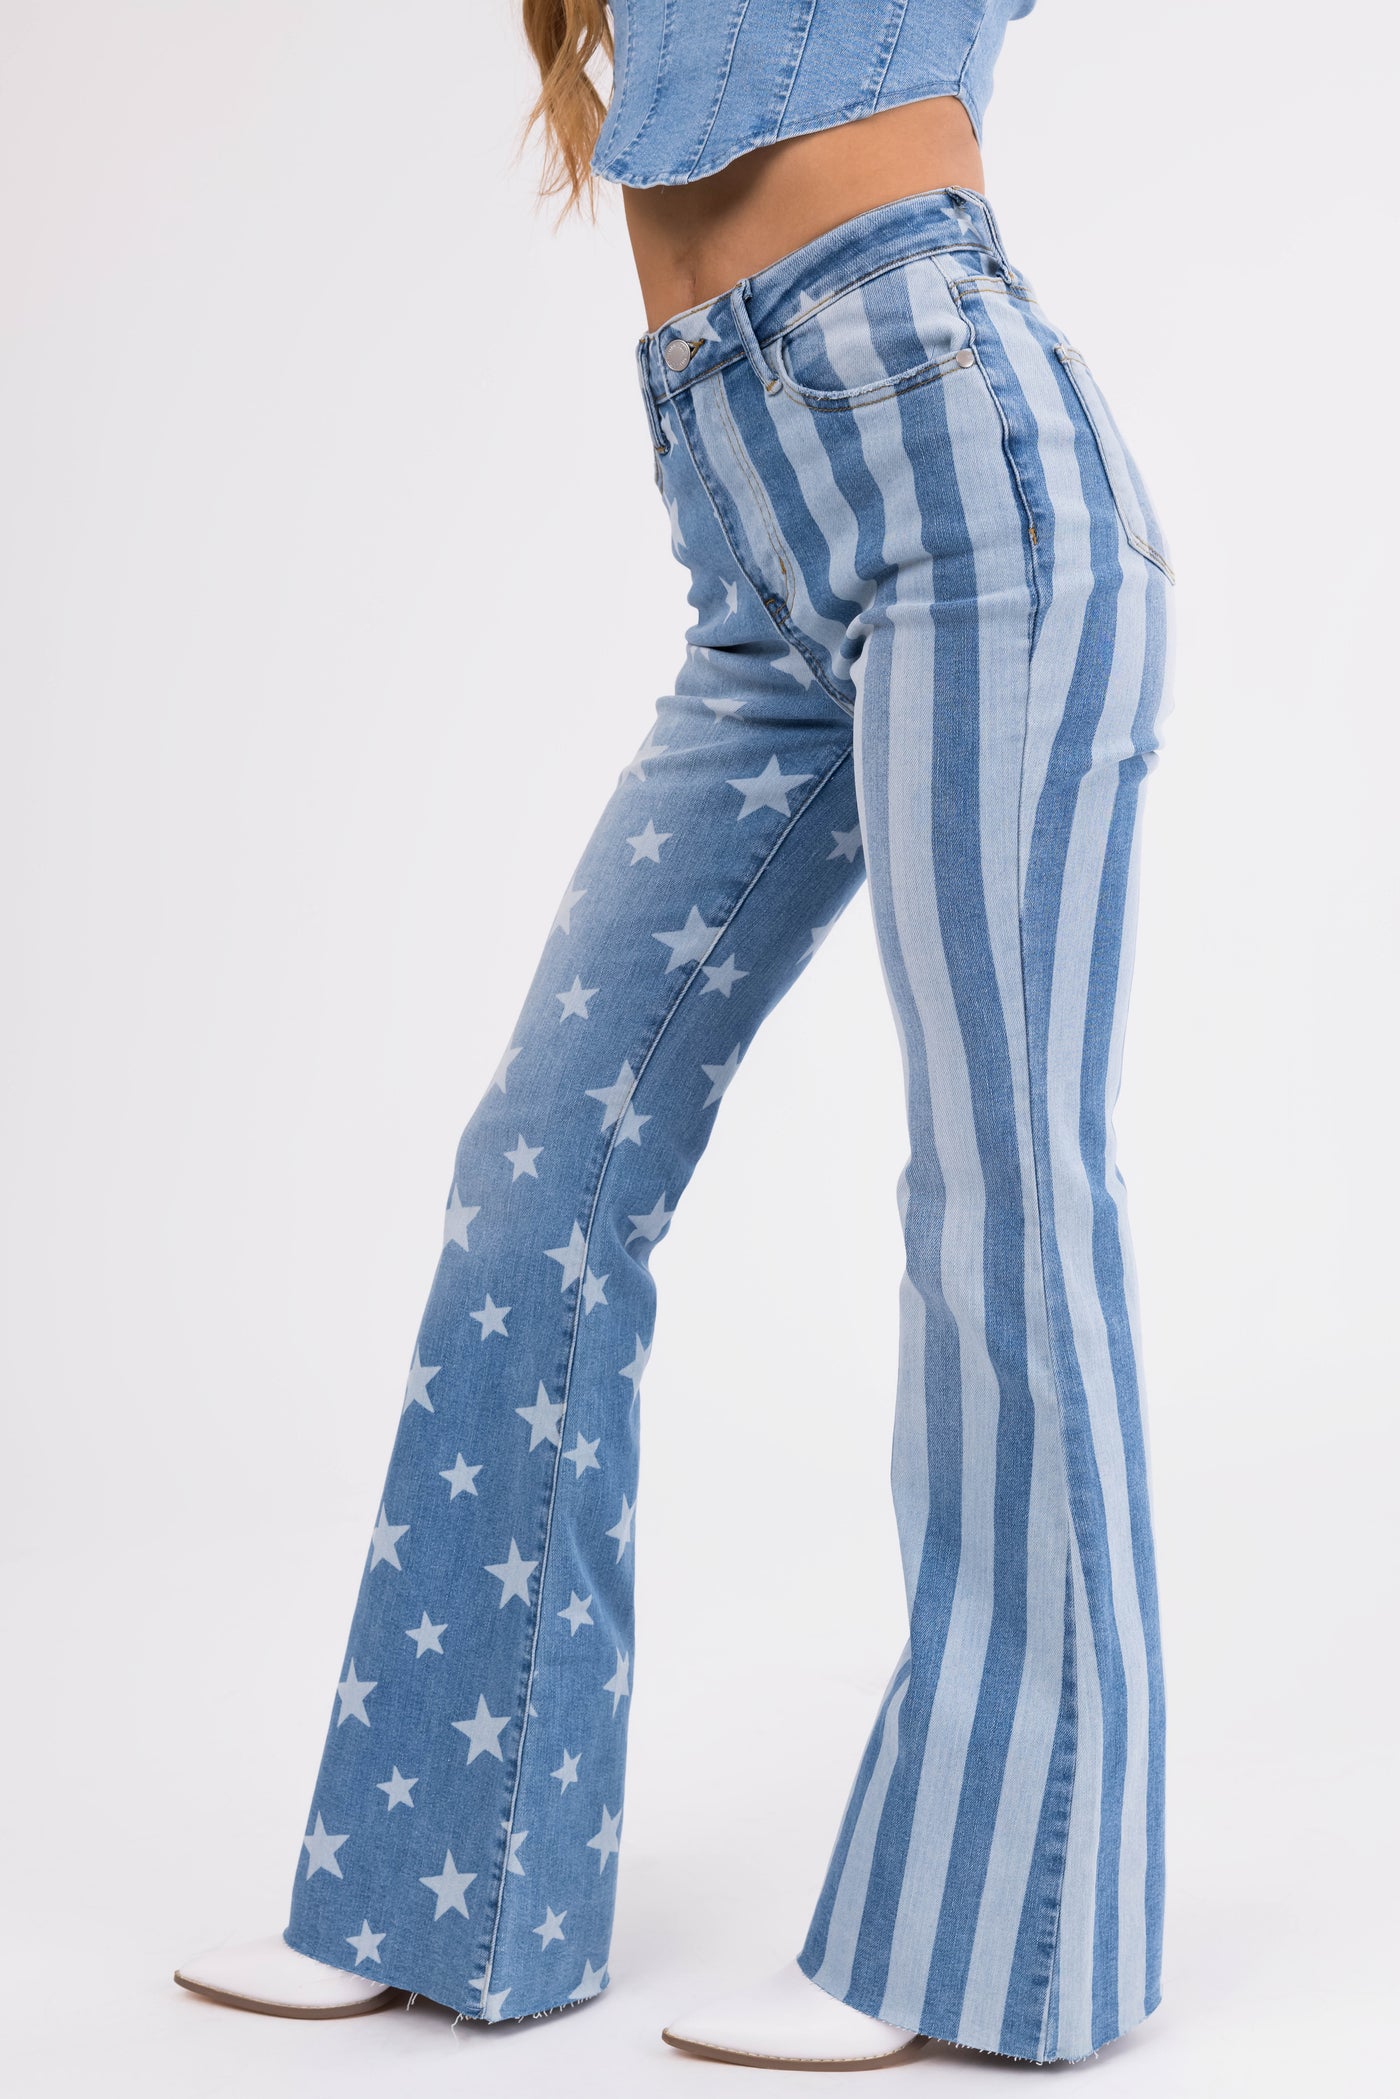 Judy Blue Medium Wash Stars and Stripes Jeans